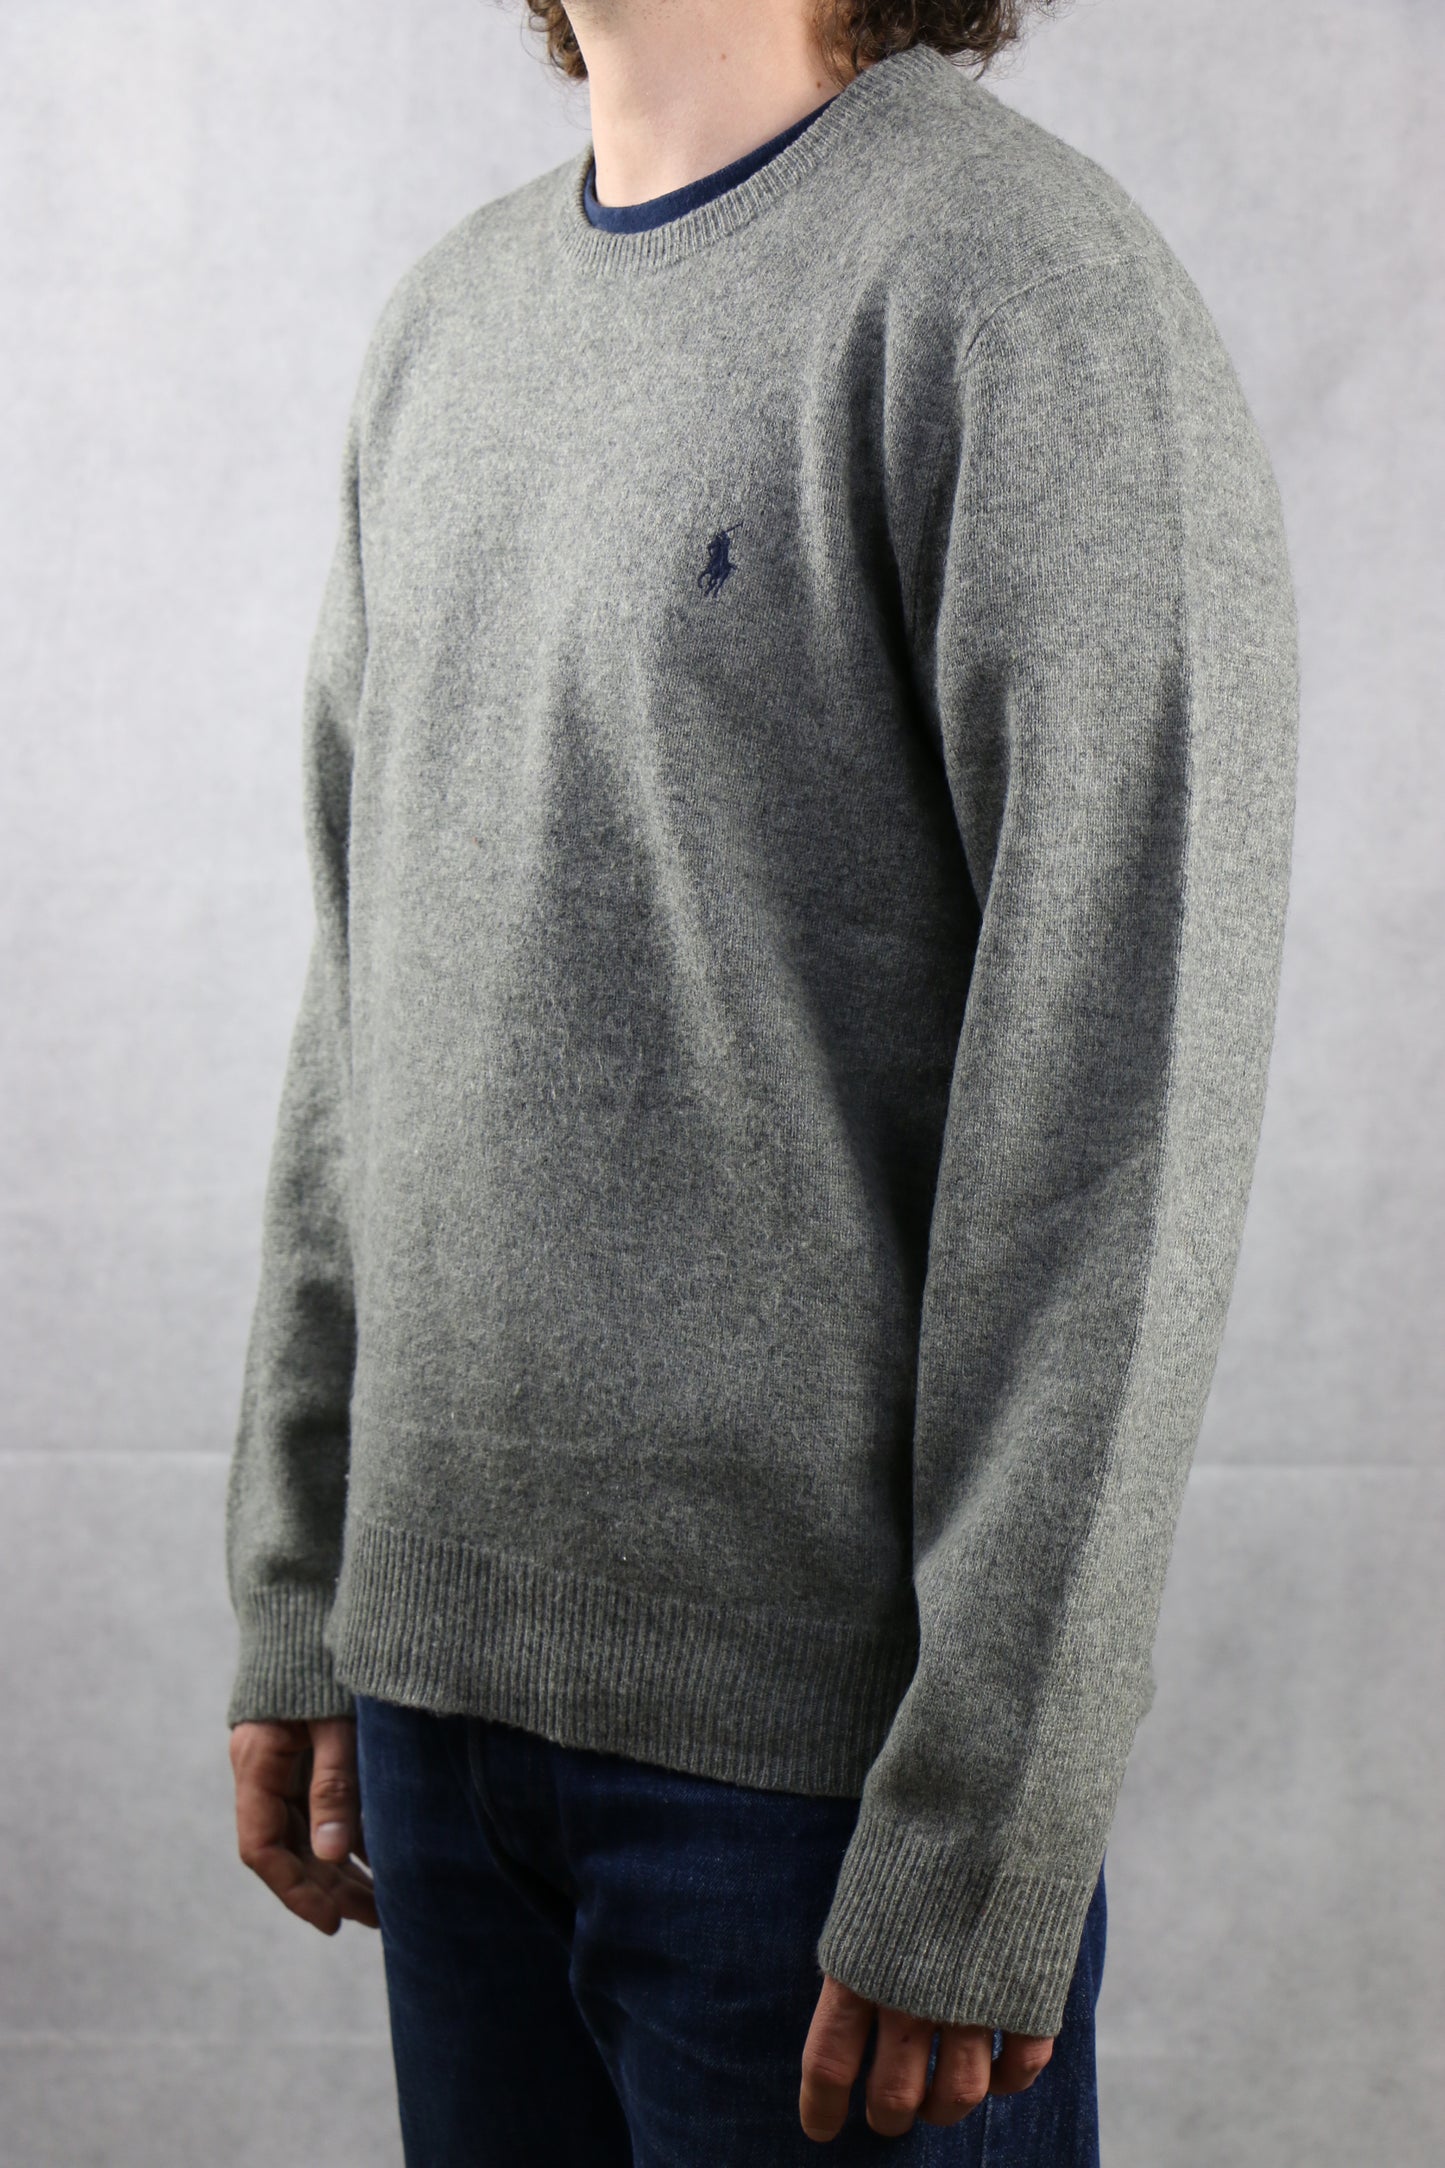 Ralph Lauren Grey Sweater - vintage clothing clochard92.com